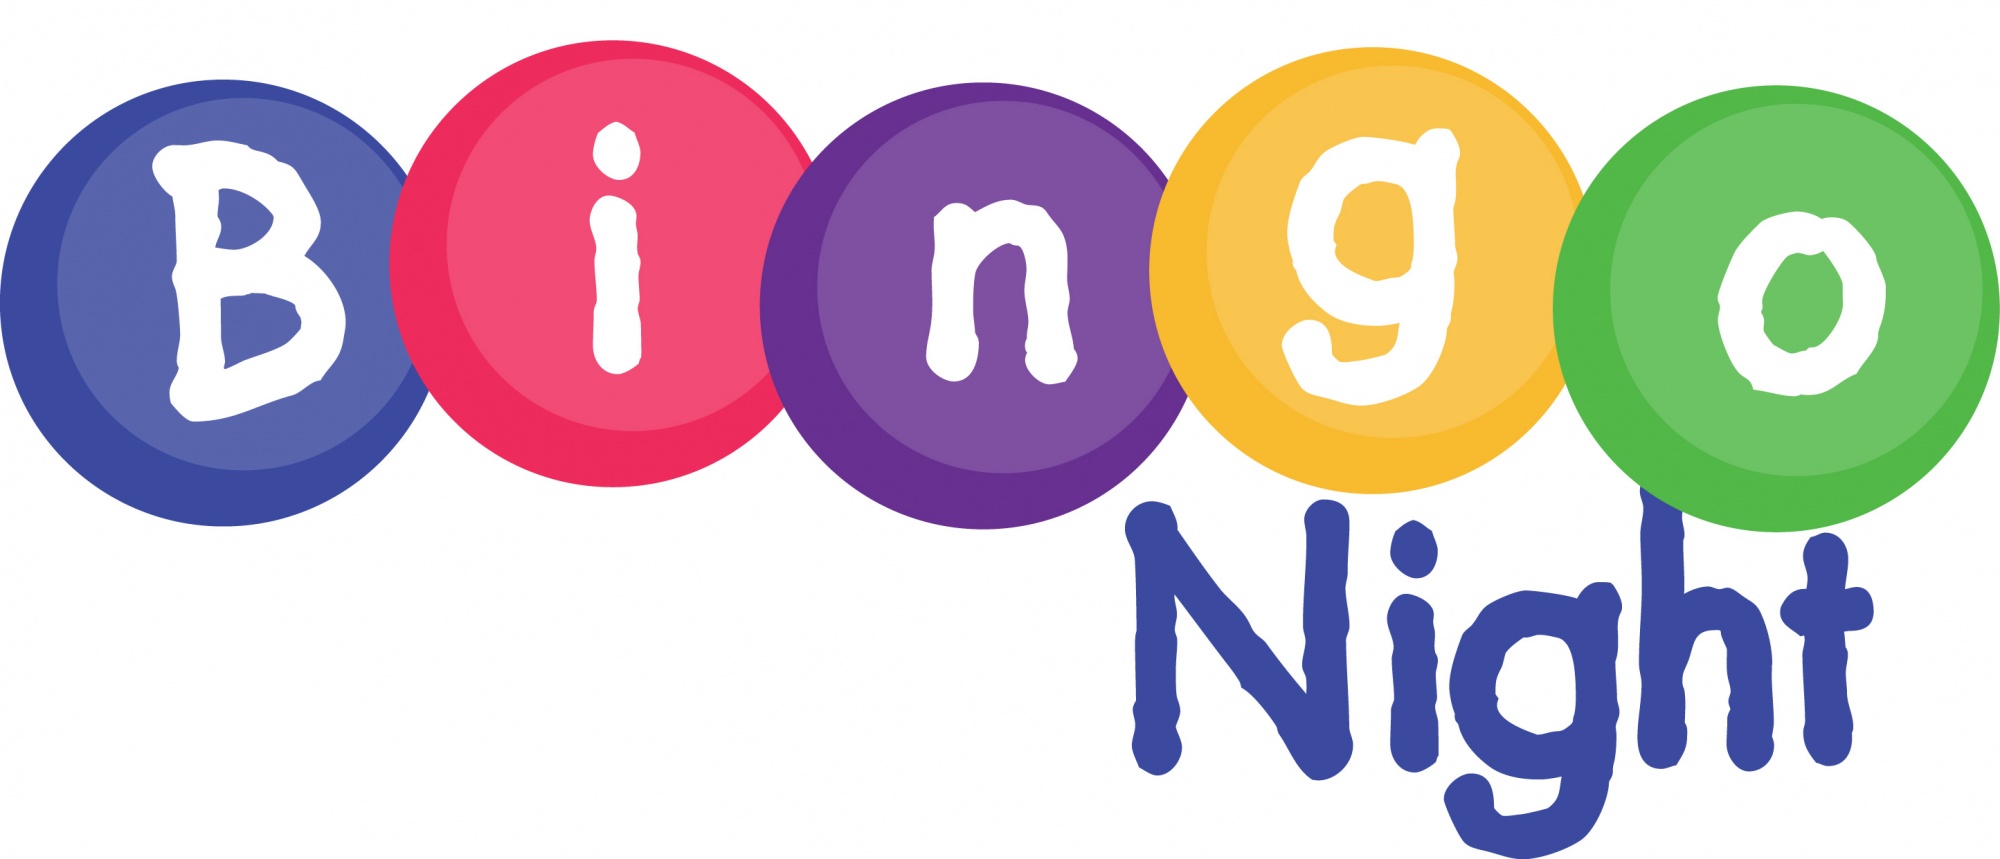 Bingo Night 6 30pm Tuesday June 4   Twinbrook Elementary School Pta